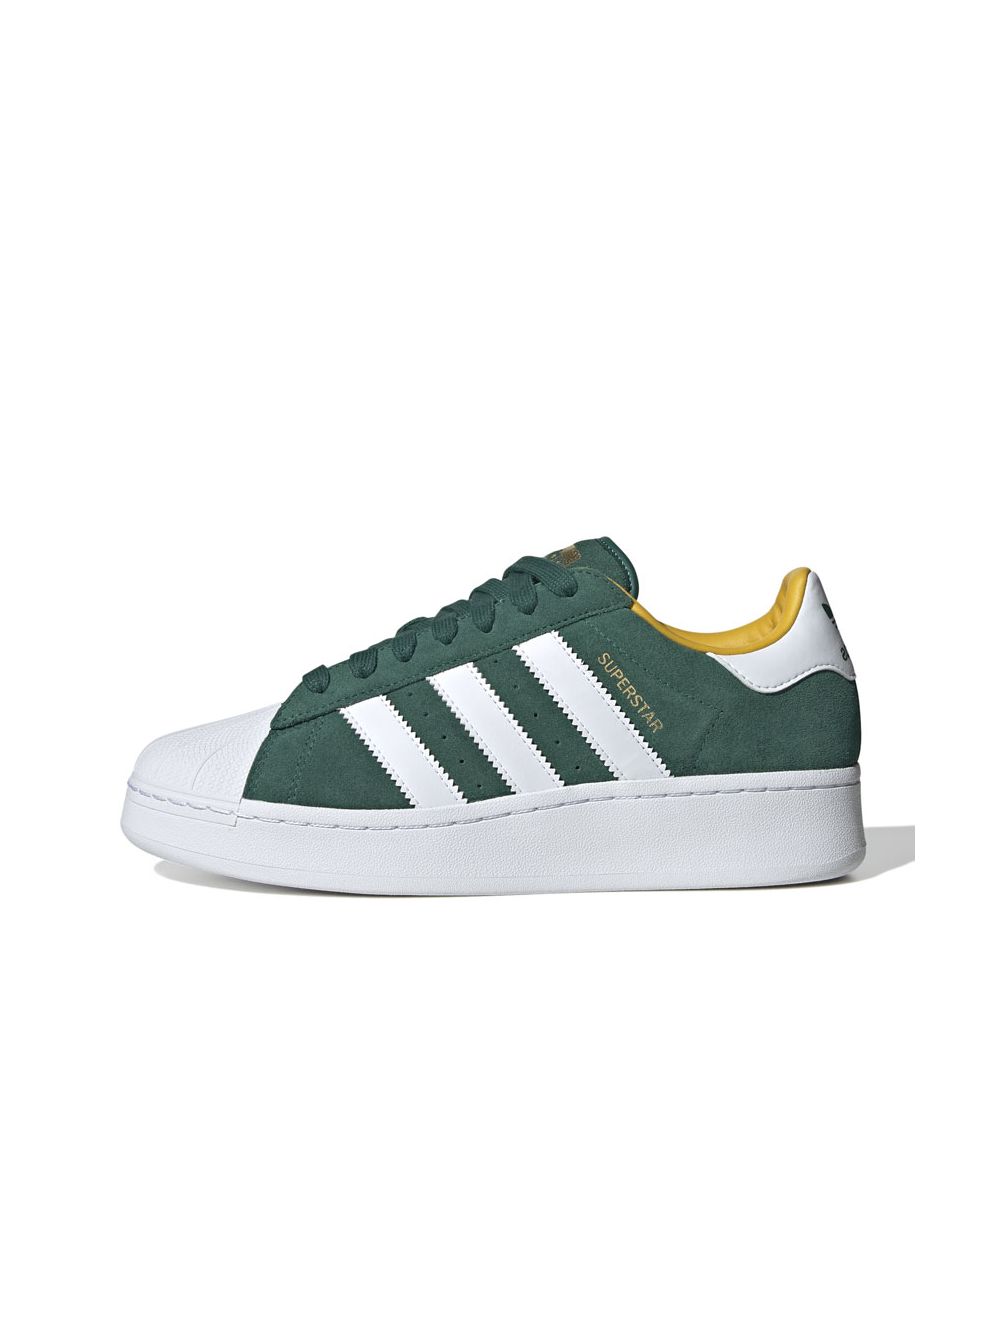 Shop adidas Originals Superstar XLG Mens Shoes Green/White/Gold